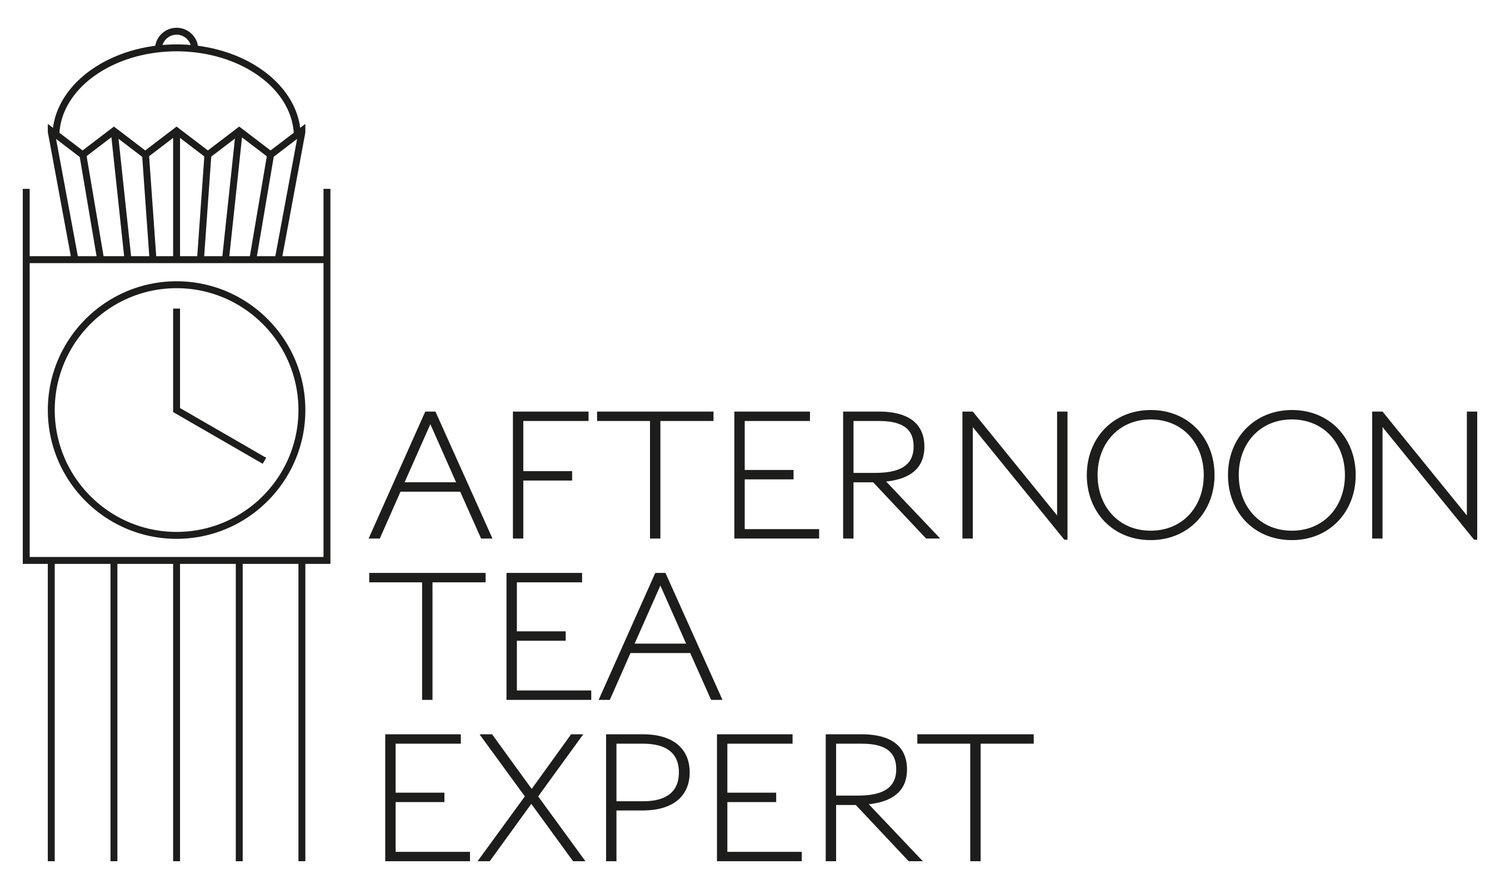 Hand bag etiquette for afternoon tea — Afternoon Tea Expert